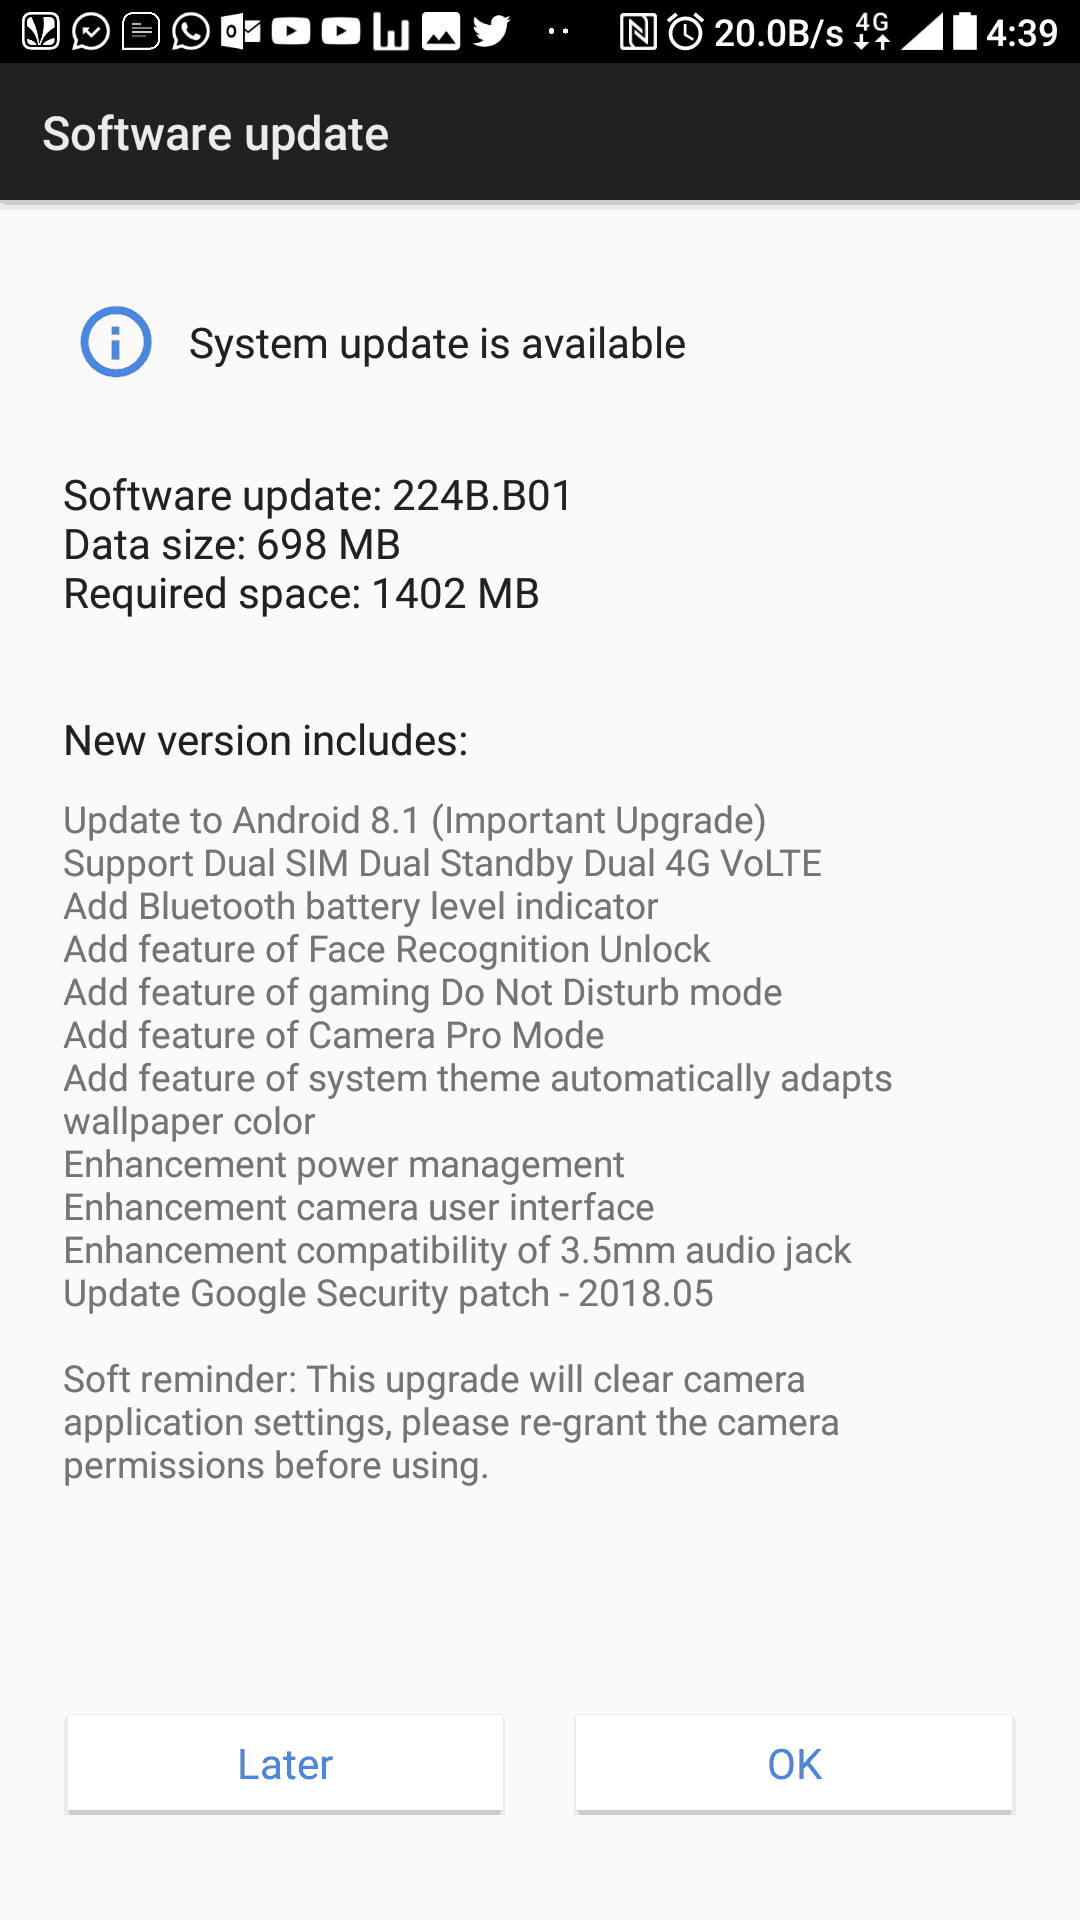 Nokia 7 android 8.1 oreo update